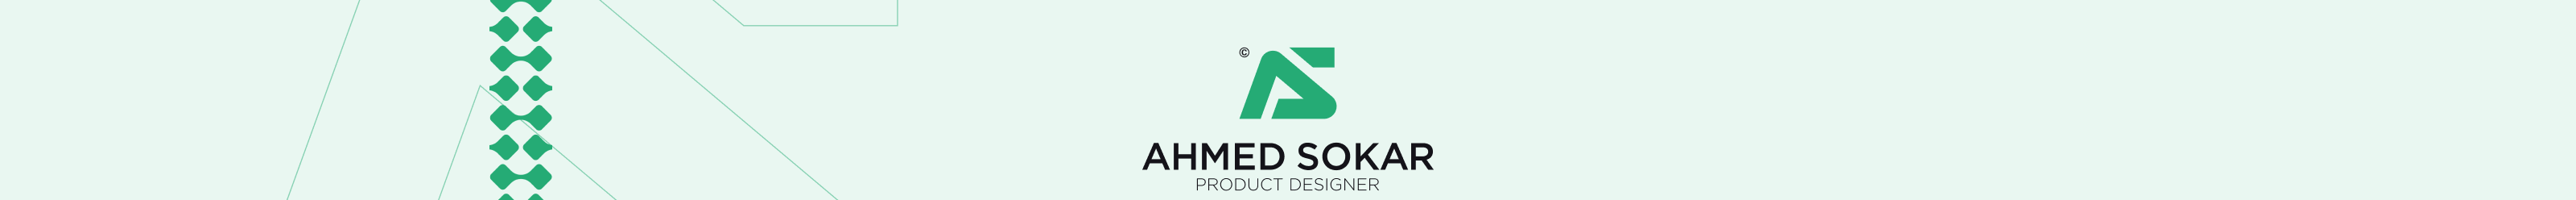 Ahmed Sokar's profile banner